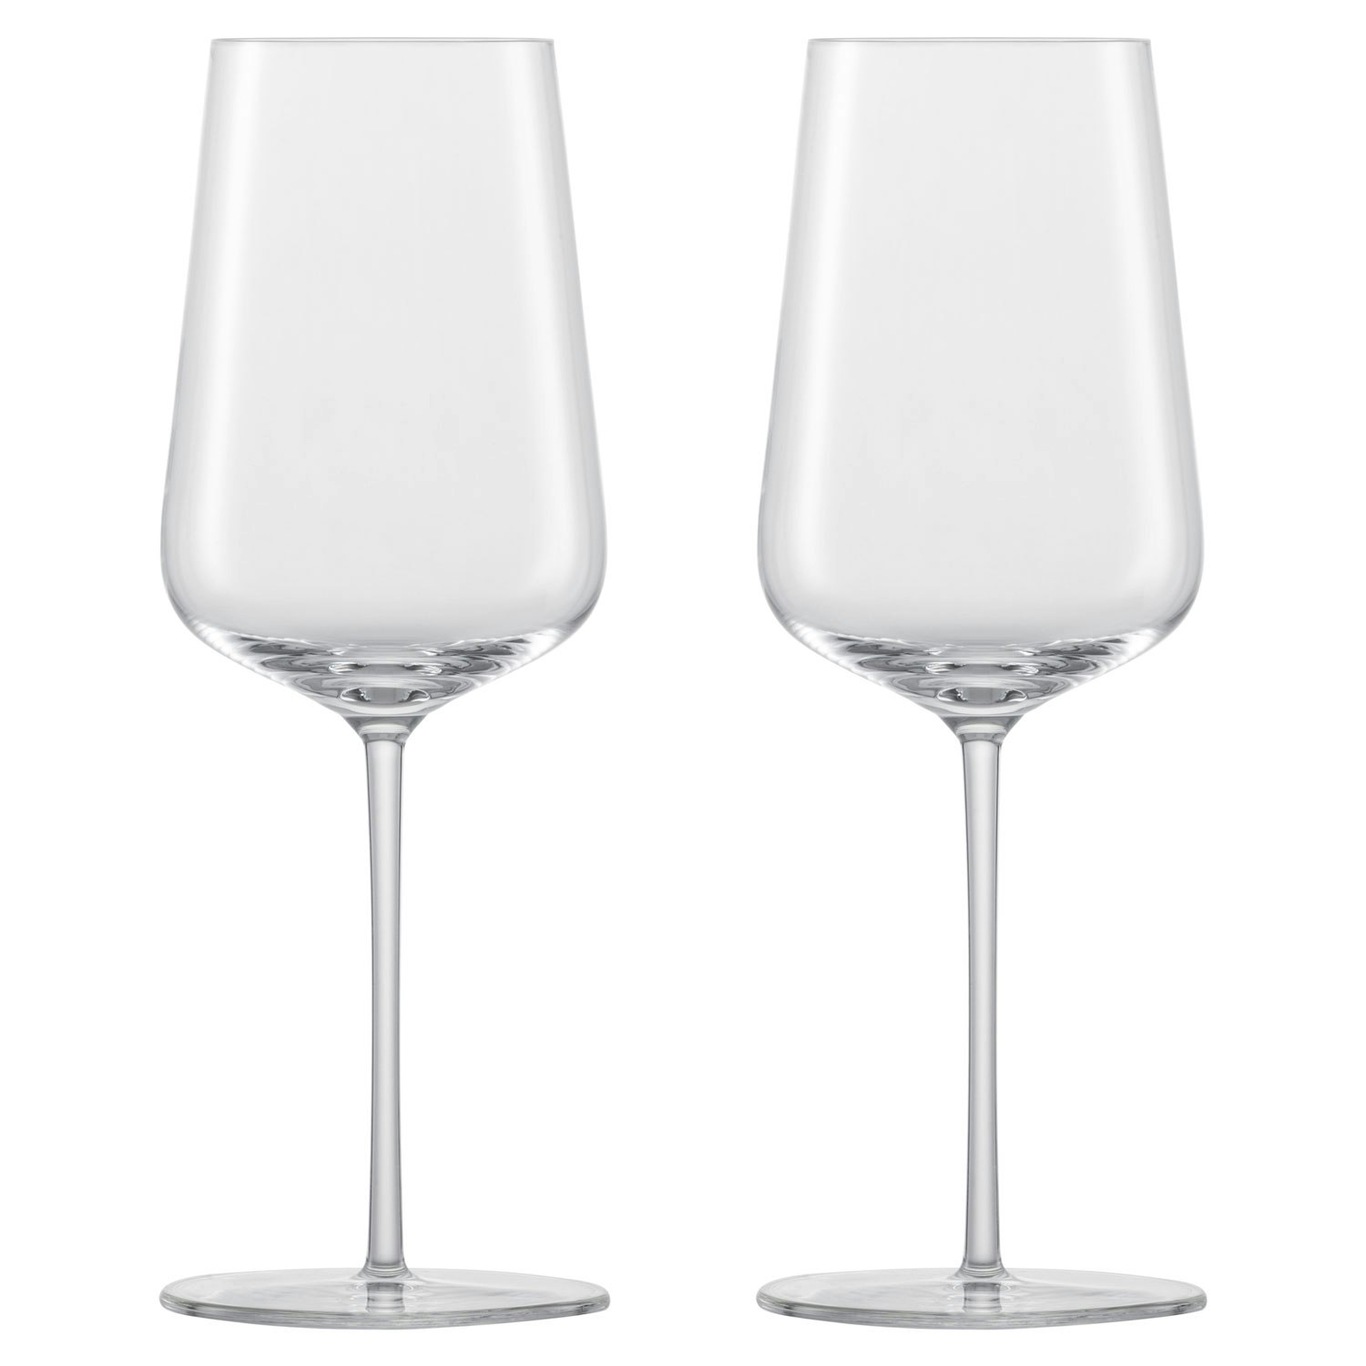 https://royaldesign.com/image/2/zwiesel-vervino-chardonnay-white-wine-glass-48-cl-2-pack-0?w=800&quality=80